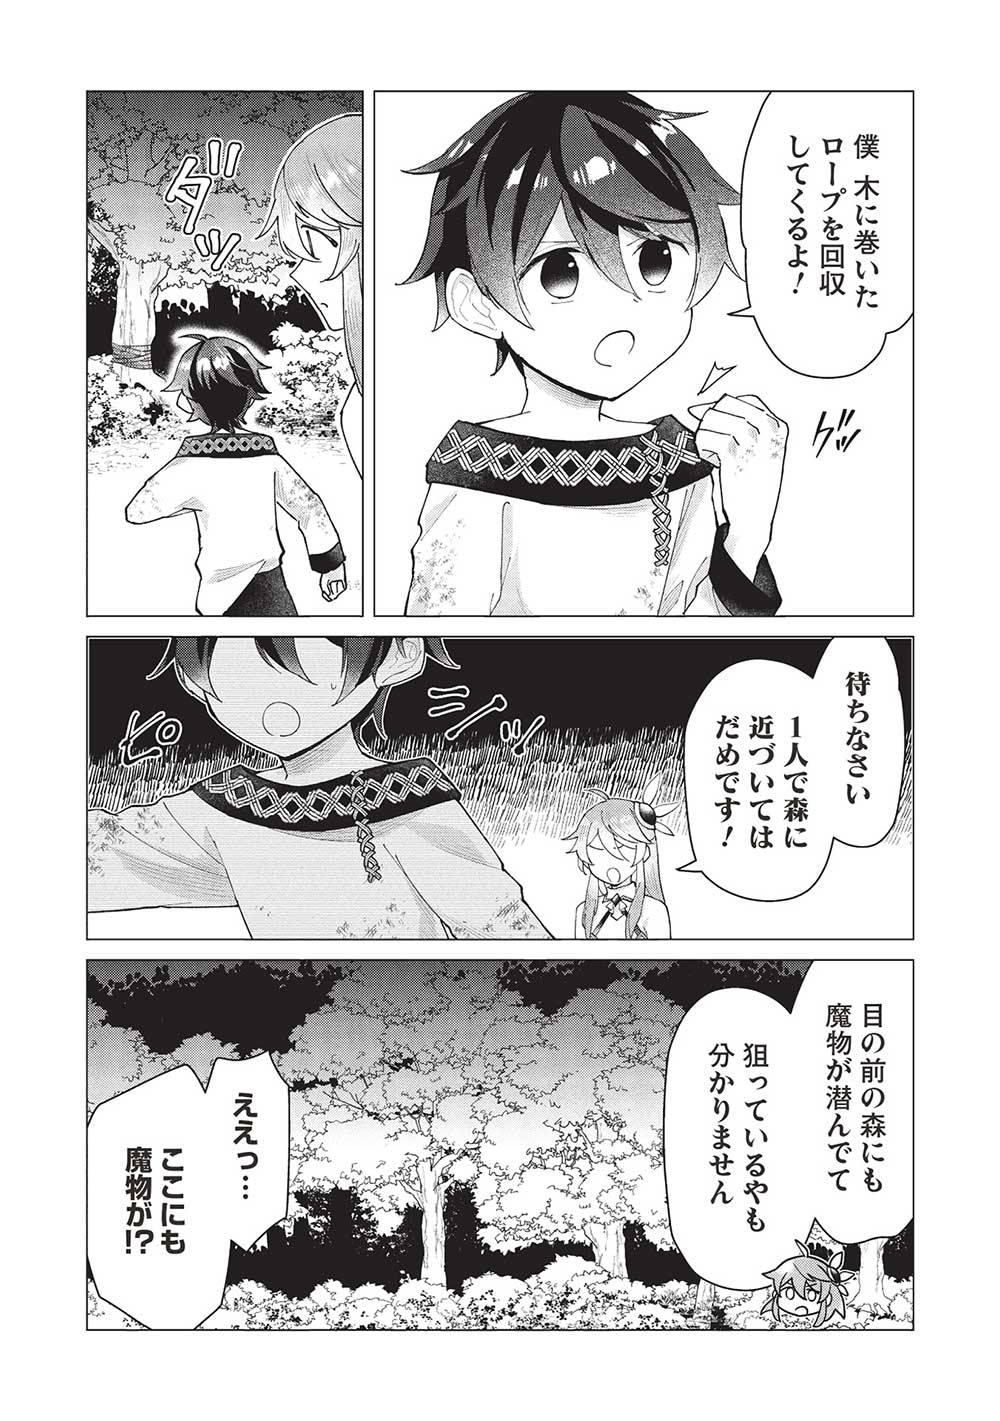 Shounen Marle no Tensei Boukenki - Chapter 9 - Page 2